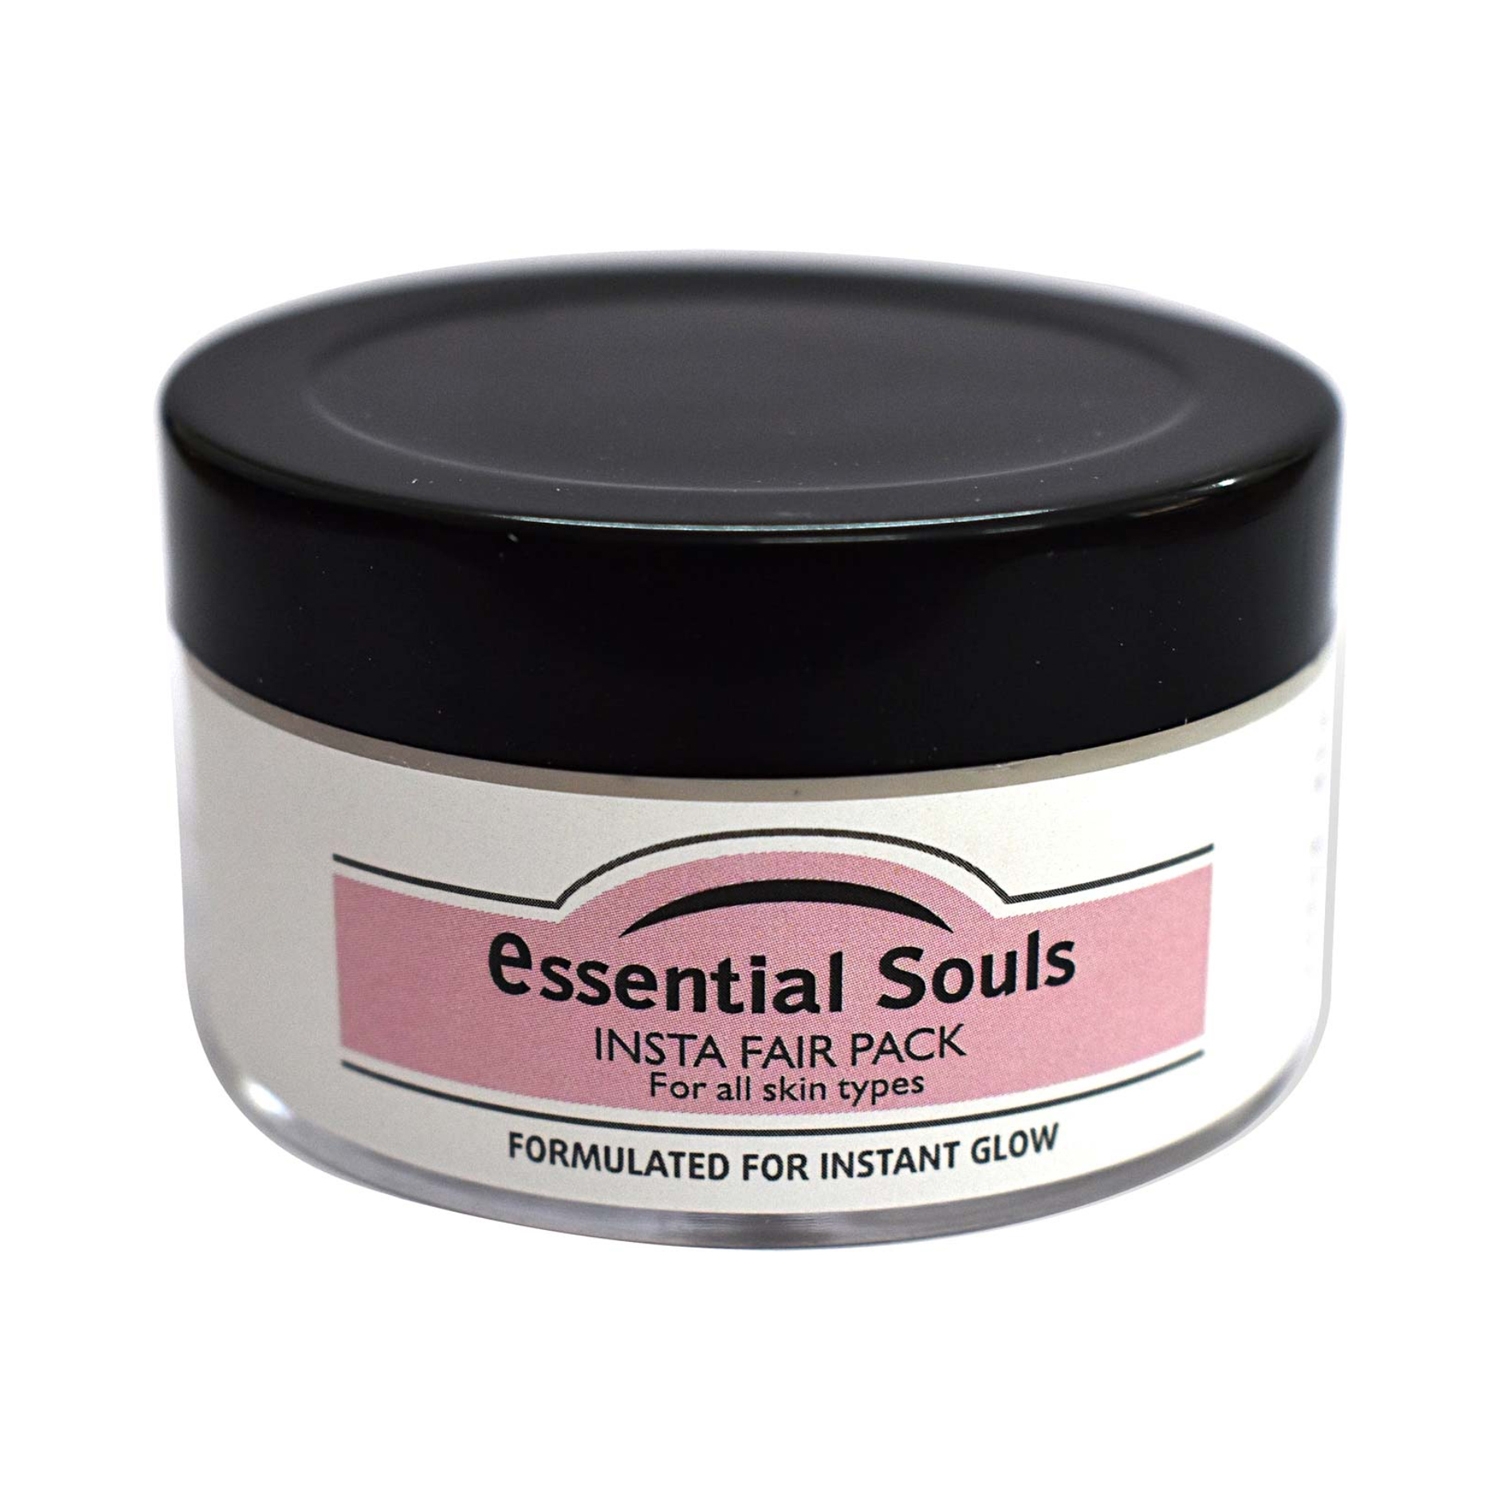 Essential Souls | Essential Souls Insta Fair Pack (50g)